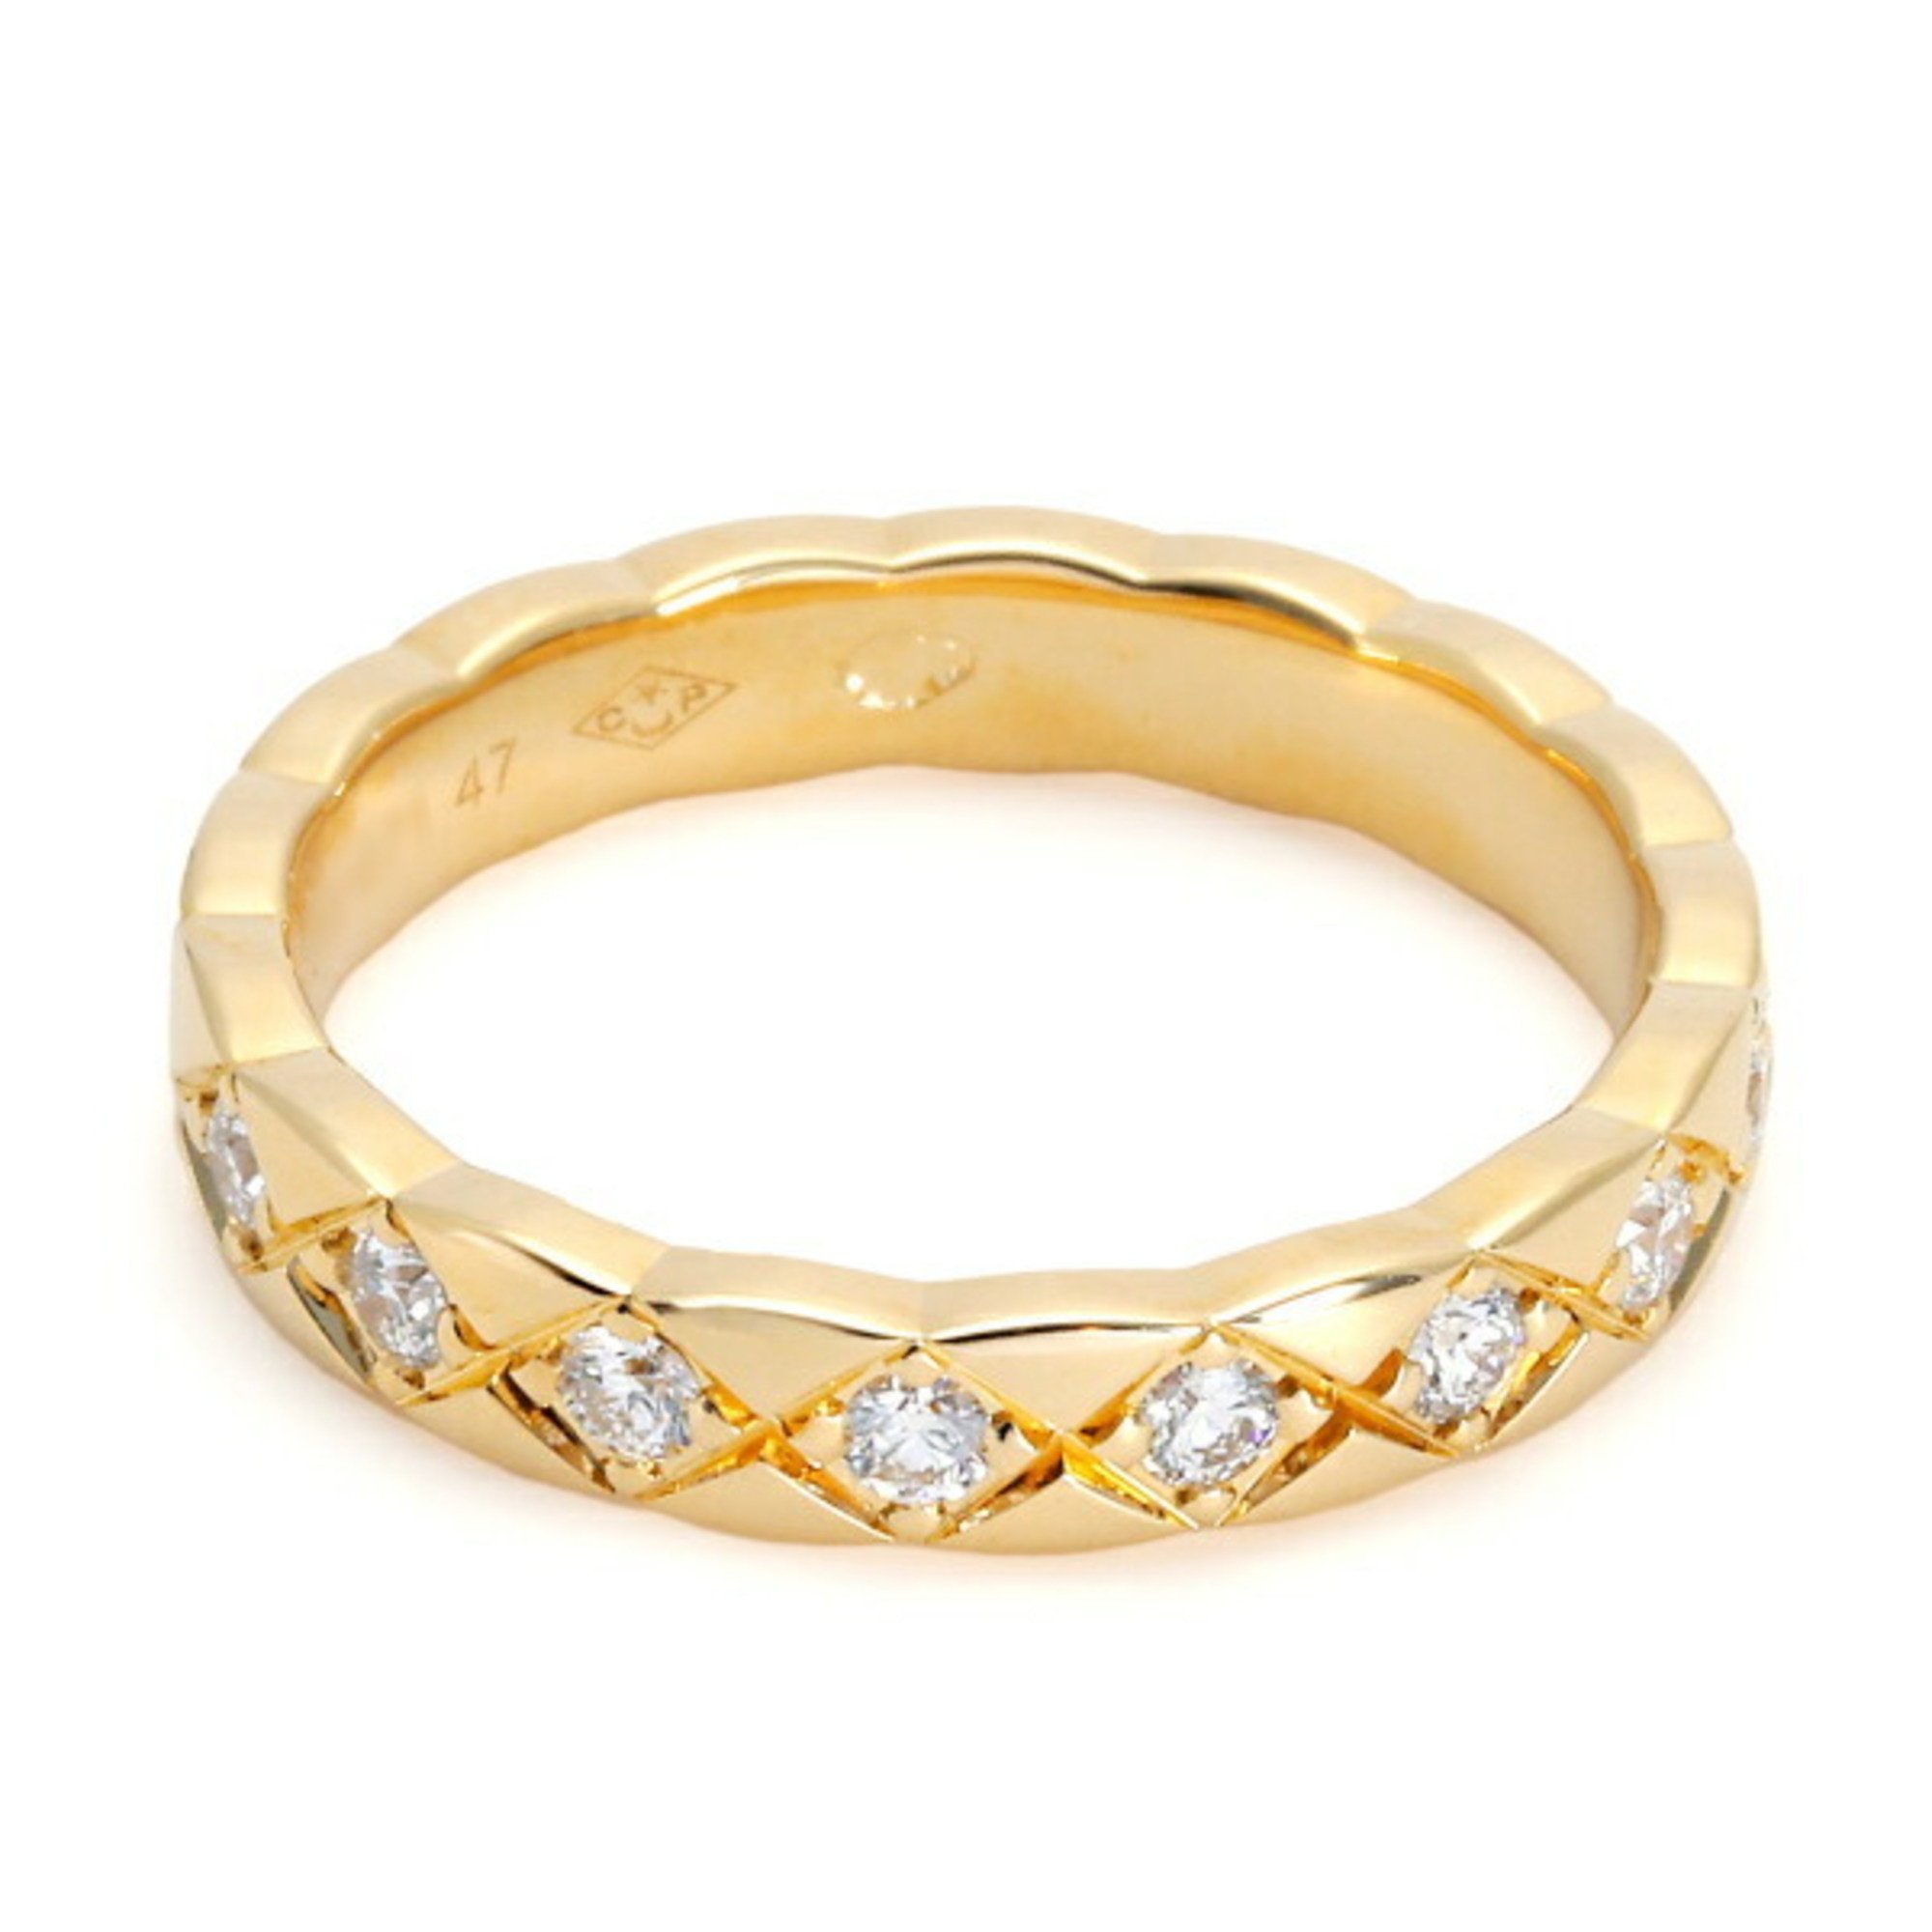 Chanel Coco Crush K18YG Yellow Gold Ring